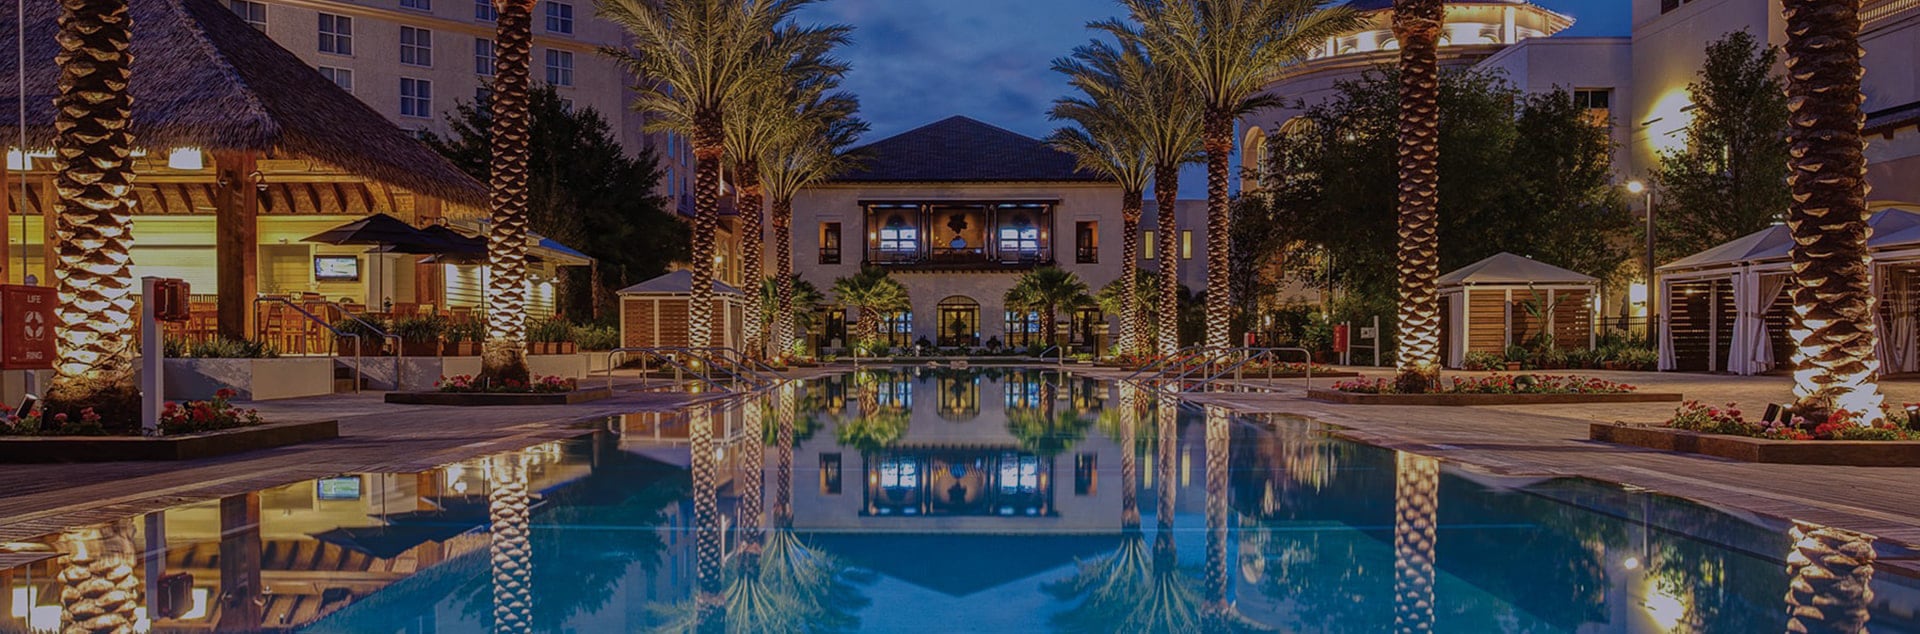 Orlando Palms Resort Pool Banner